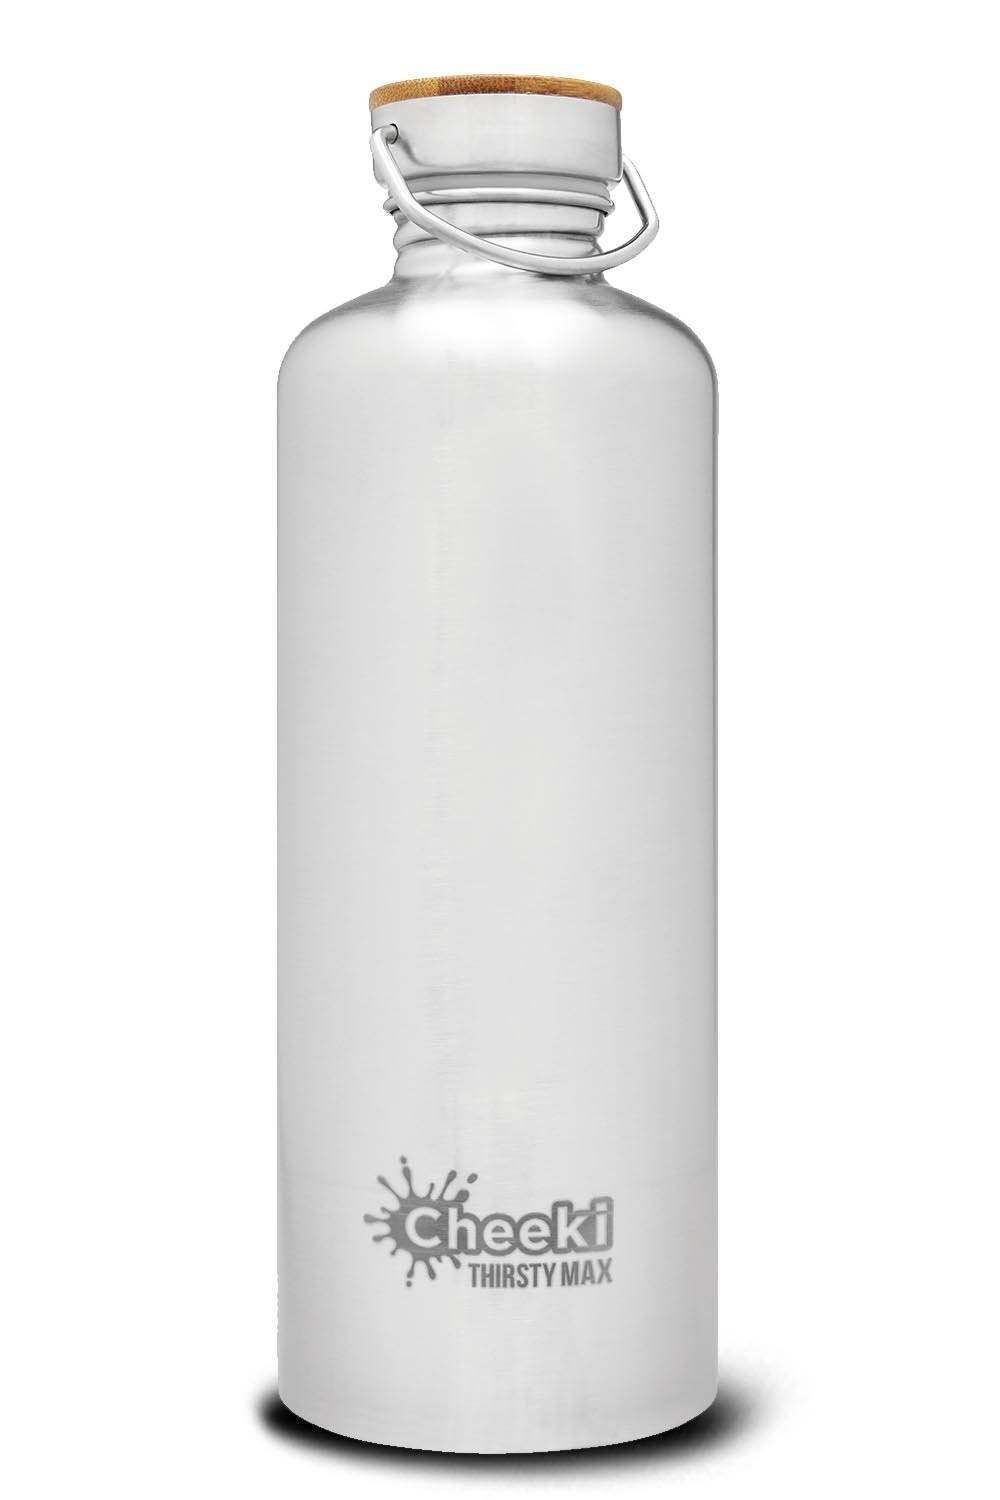 Cheeki Single Wall Thirsty Max Bottle Silver 1.6L